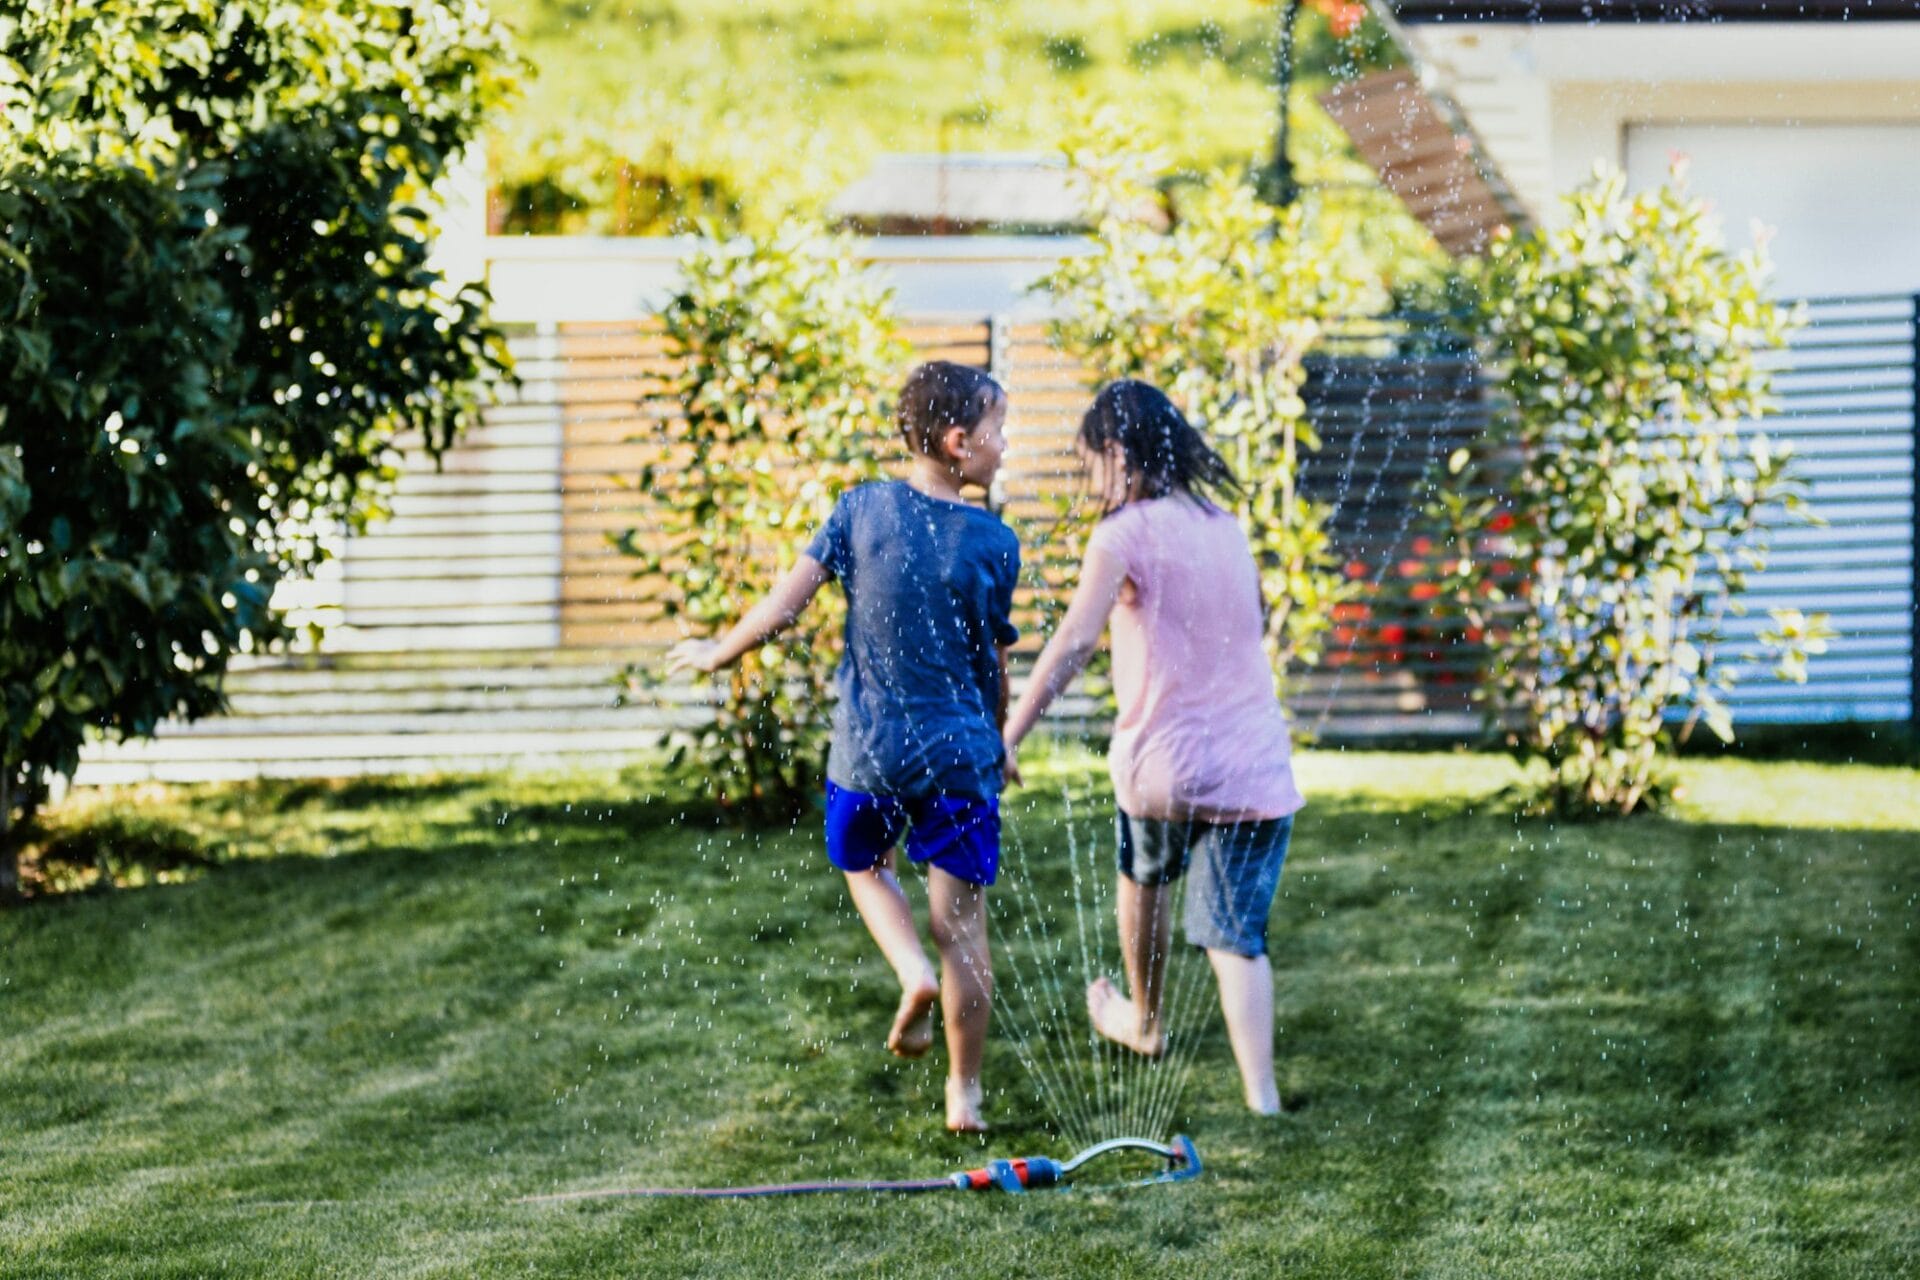 Family fun with lawn sprinkler in summertime. Children jumping over lawn sprinkler.